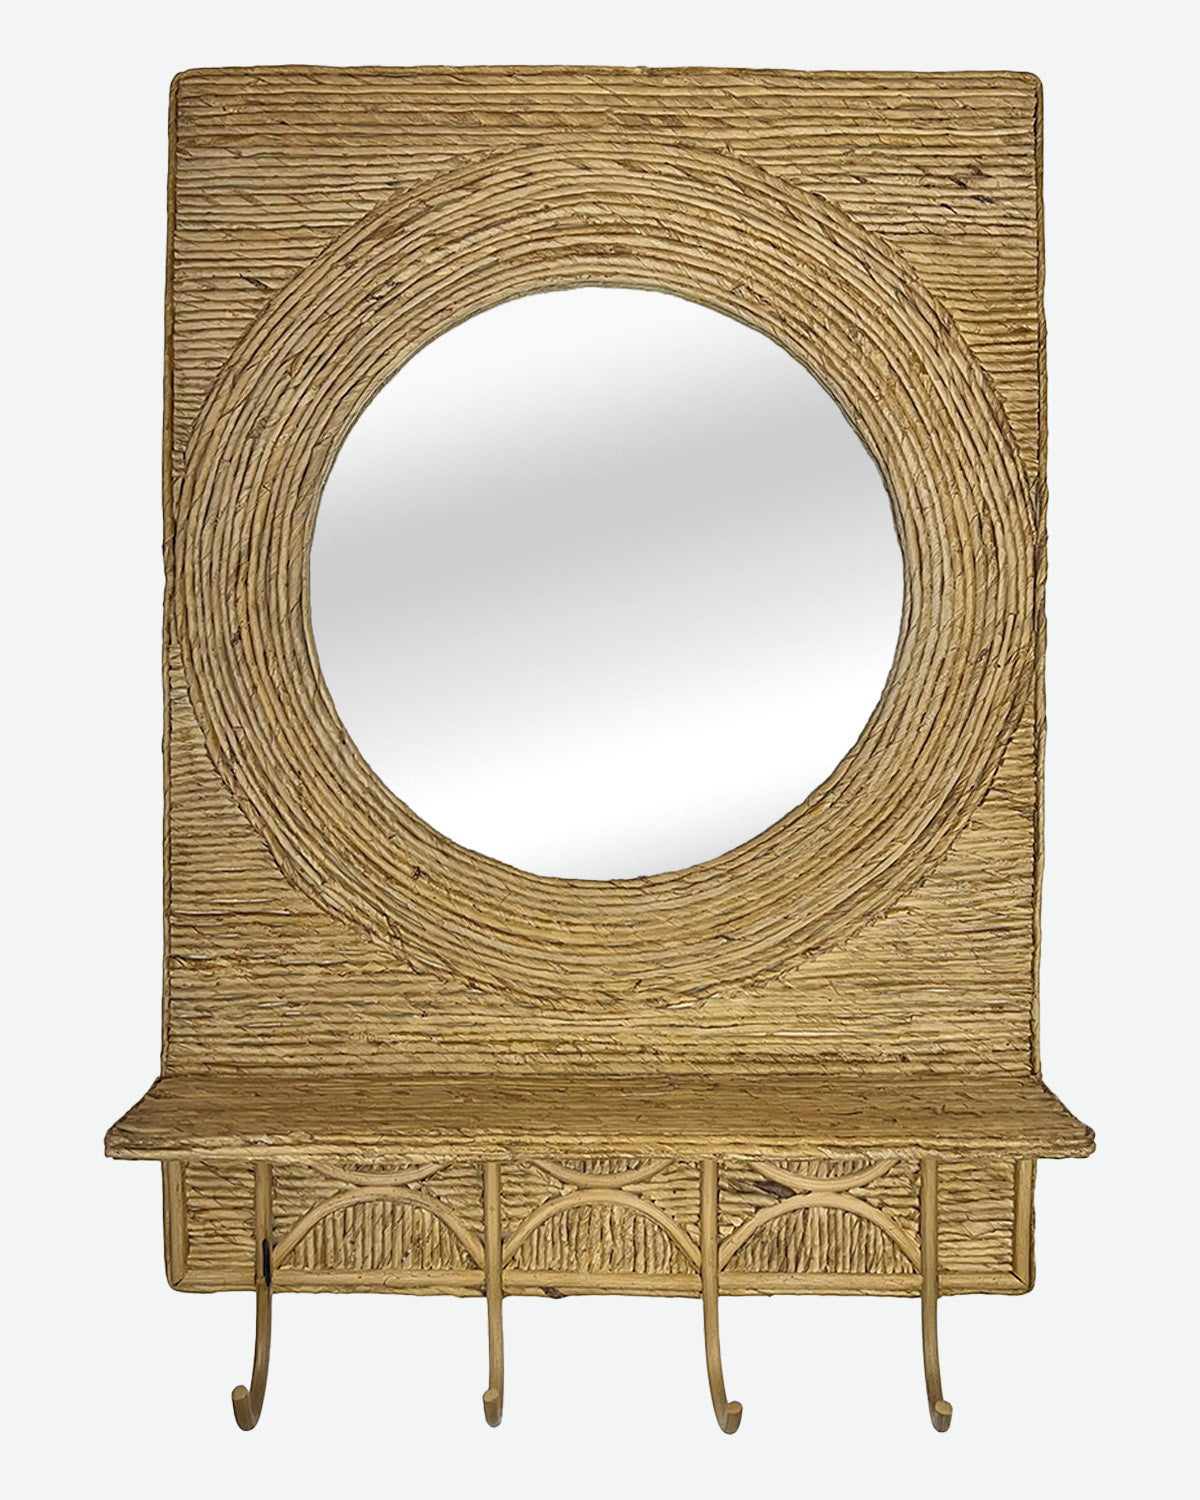 Banaha mirror